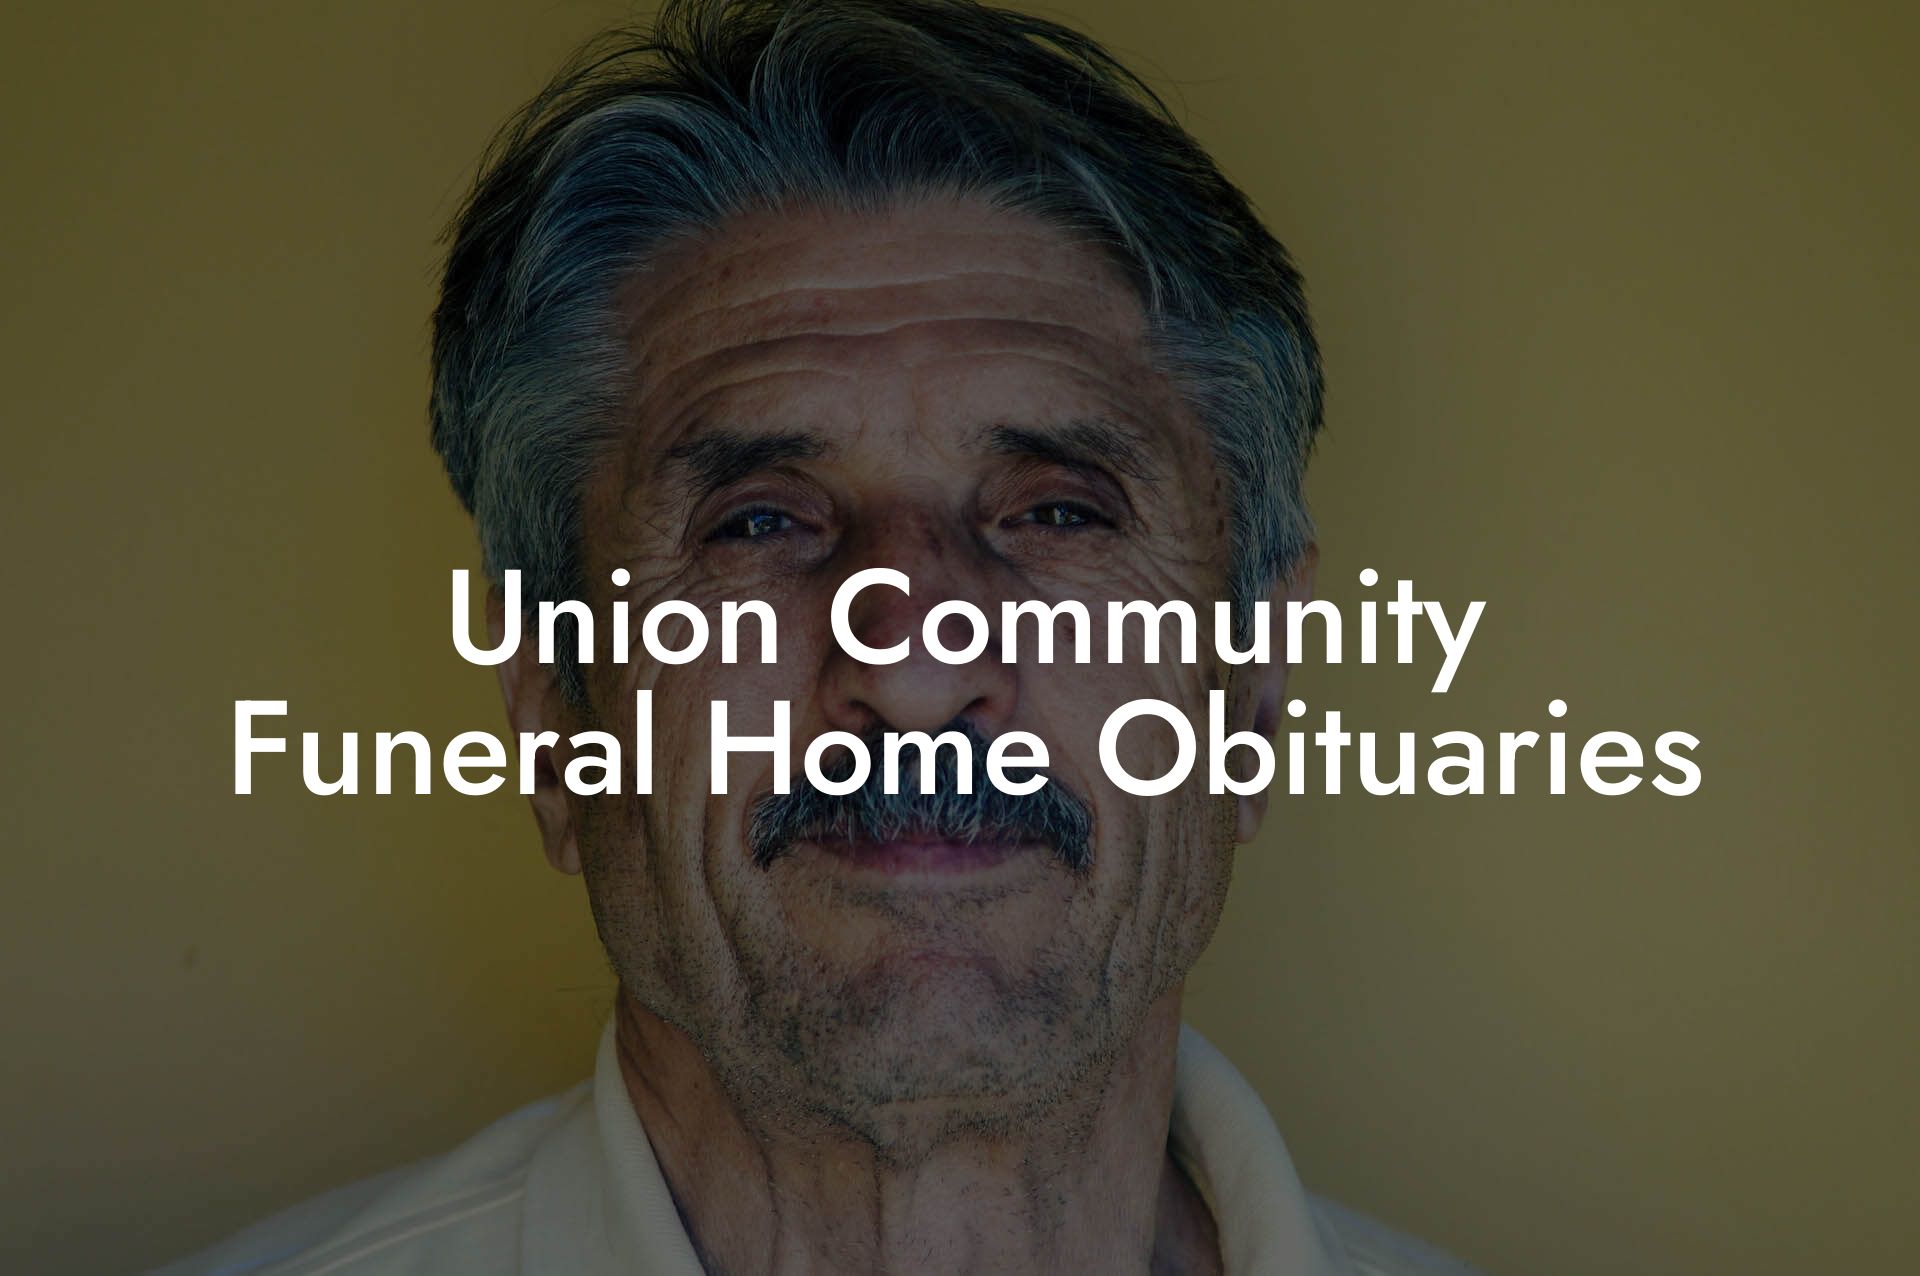 Union Community Funeral Home Obituaries